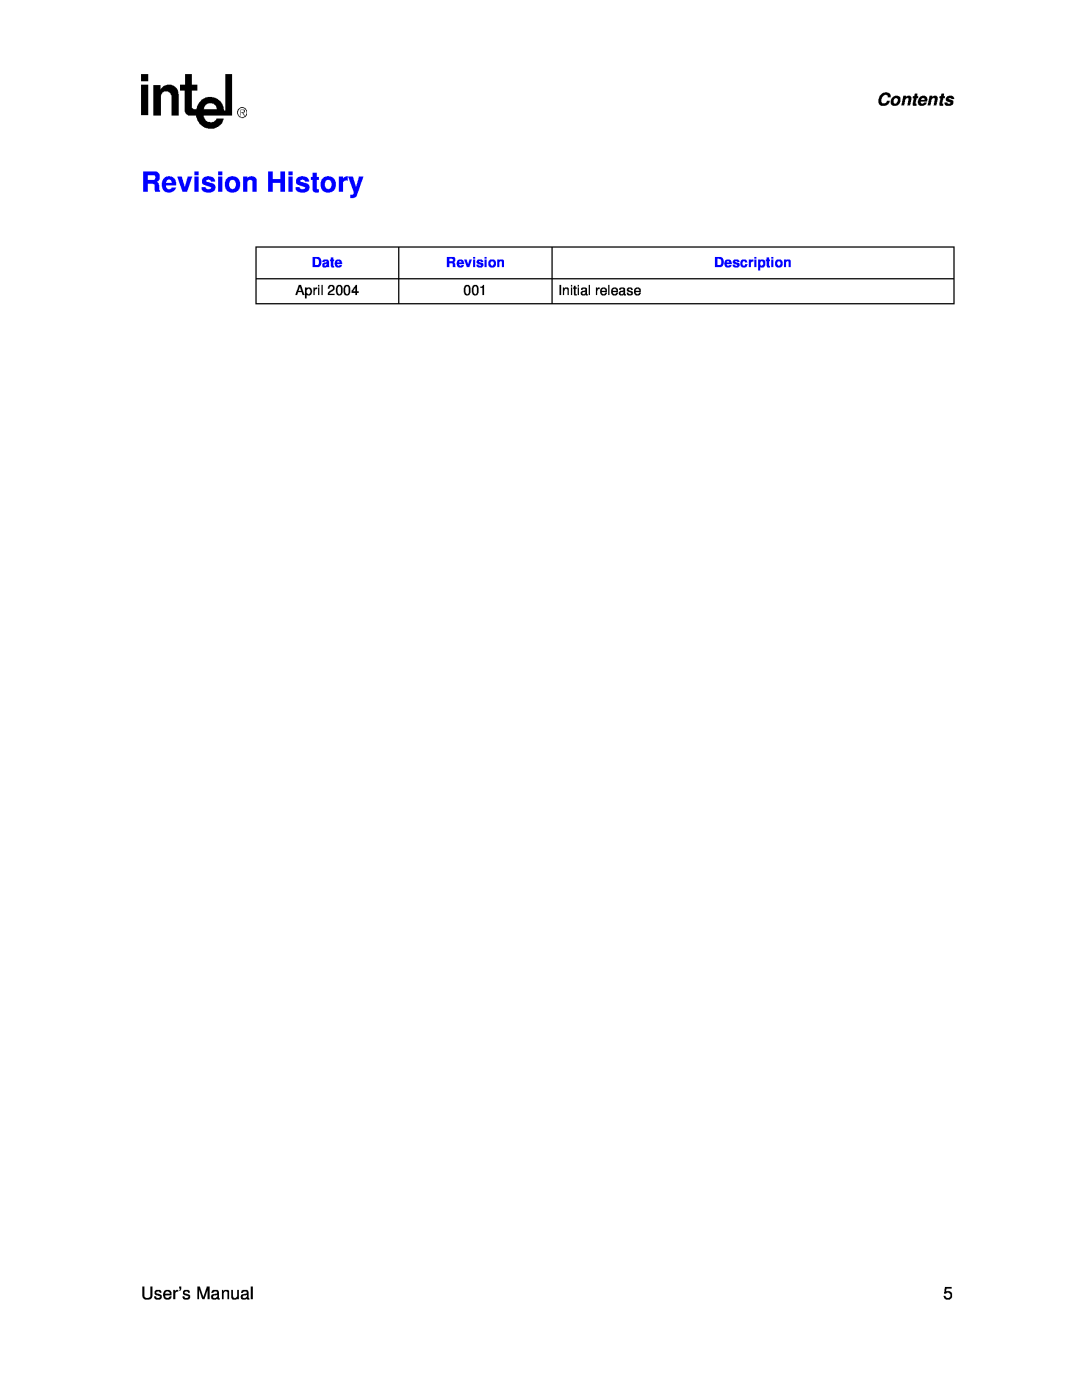 Intel IQ31244 user manual Revision History, Contents, Date, Description, Initial release, April 